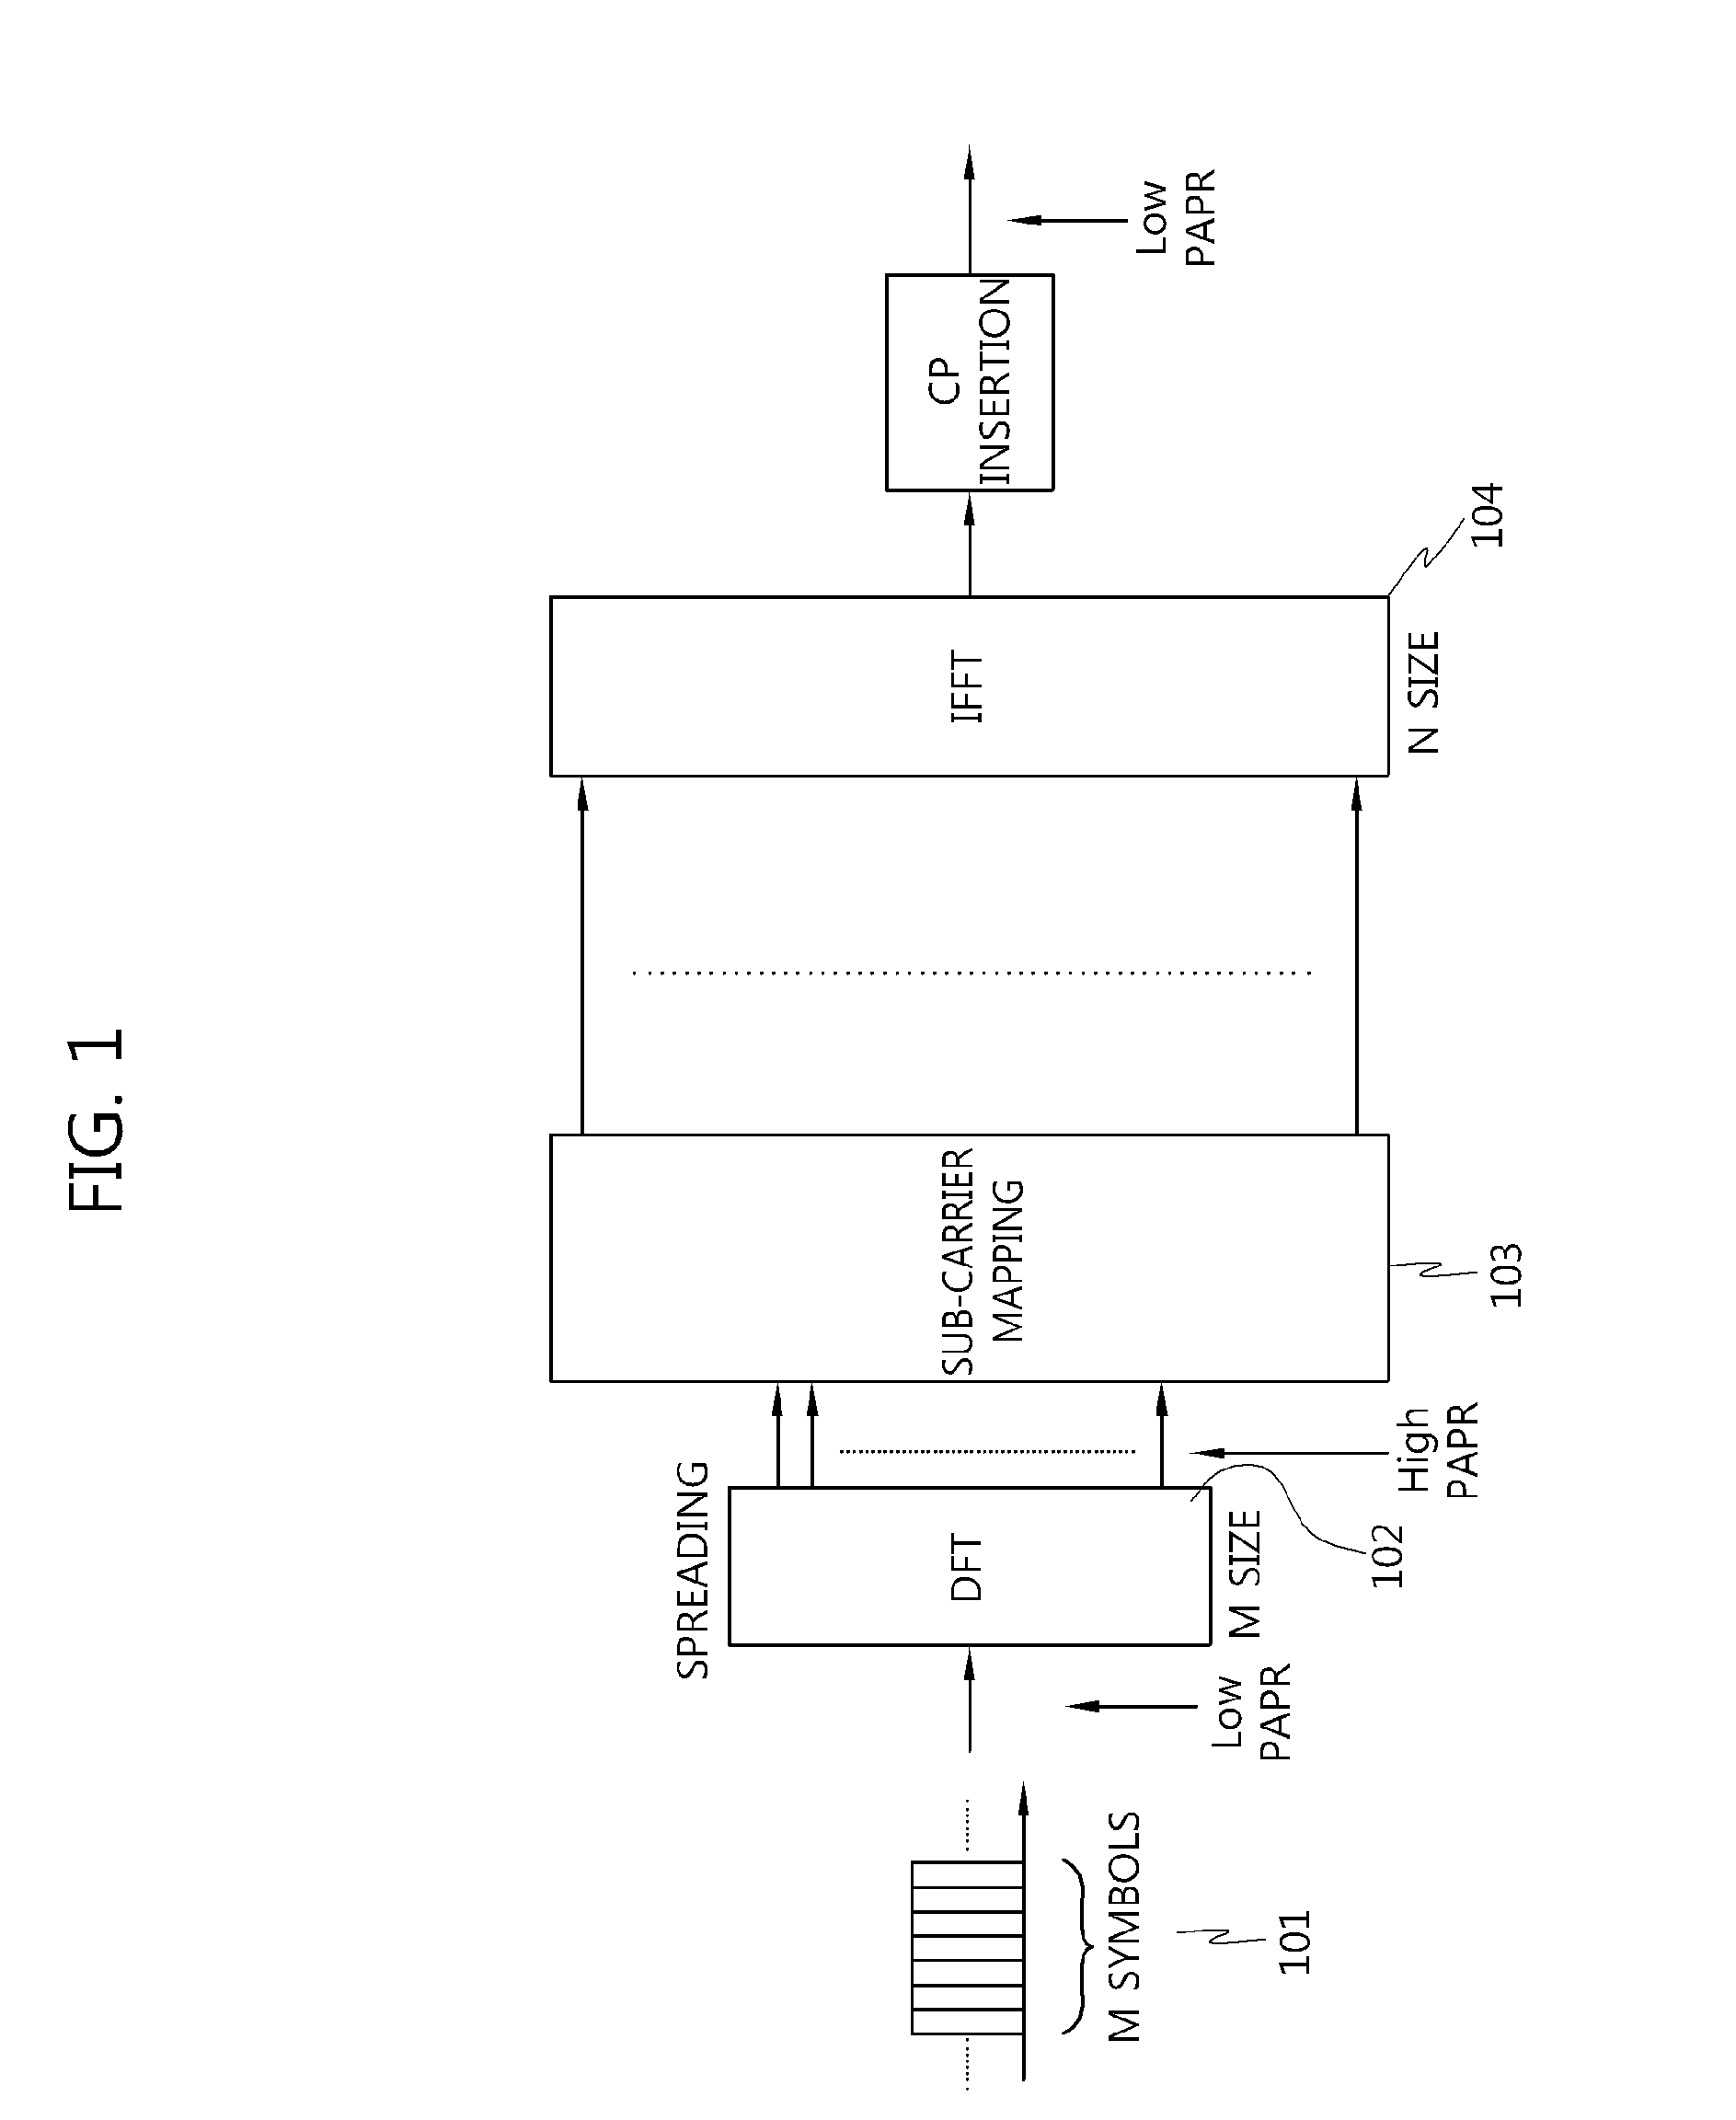 Method for generating and transmitting a reference signal for uplink demodulation in a clustered dft-spread OFDM transmission scheme